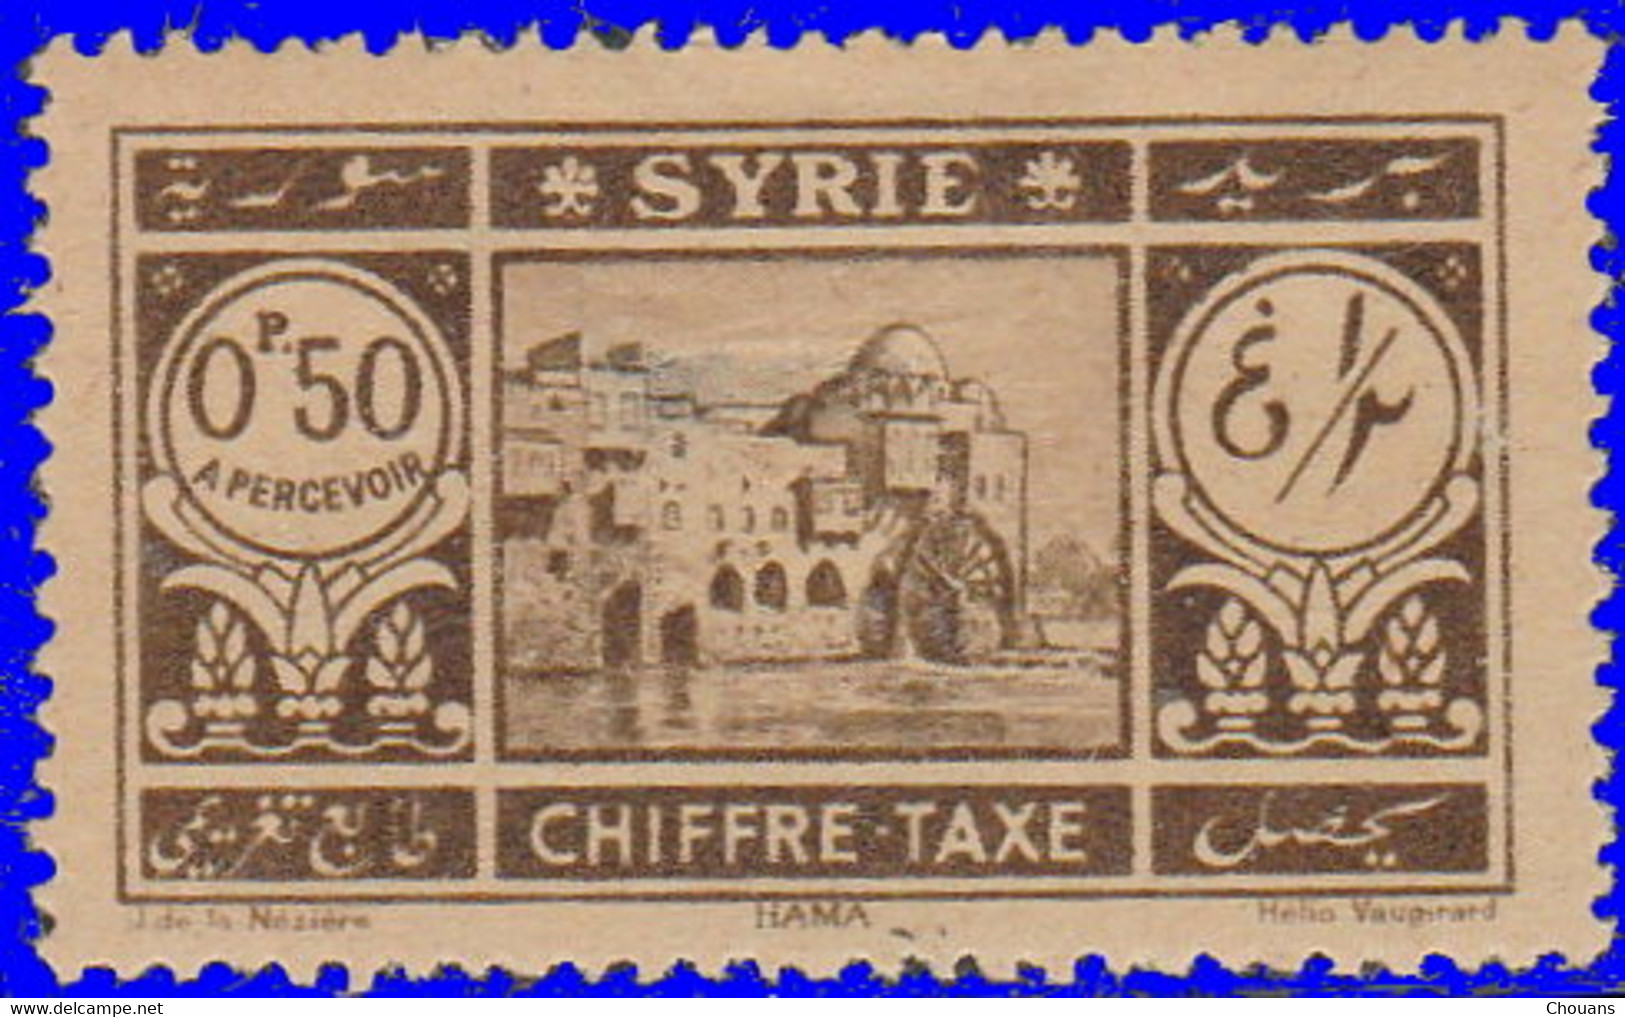 Syrie Taxe 1925. ~ T 32* - Hama - Timbres-taxe